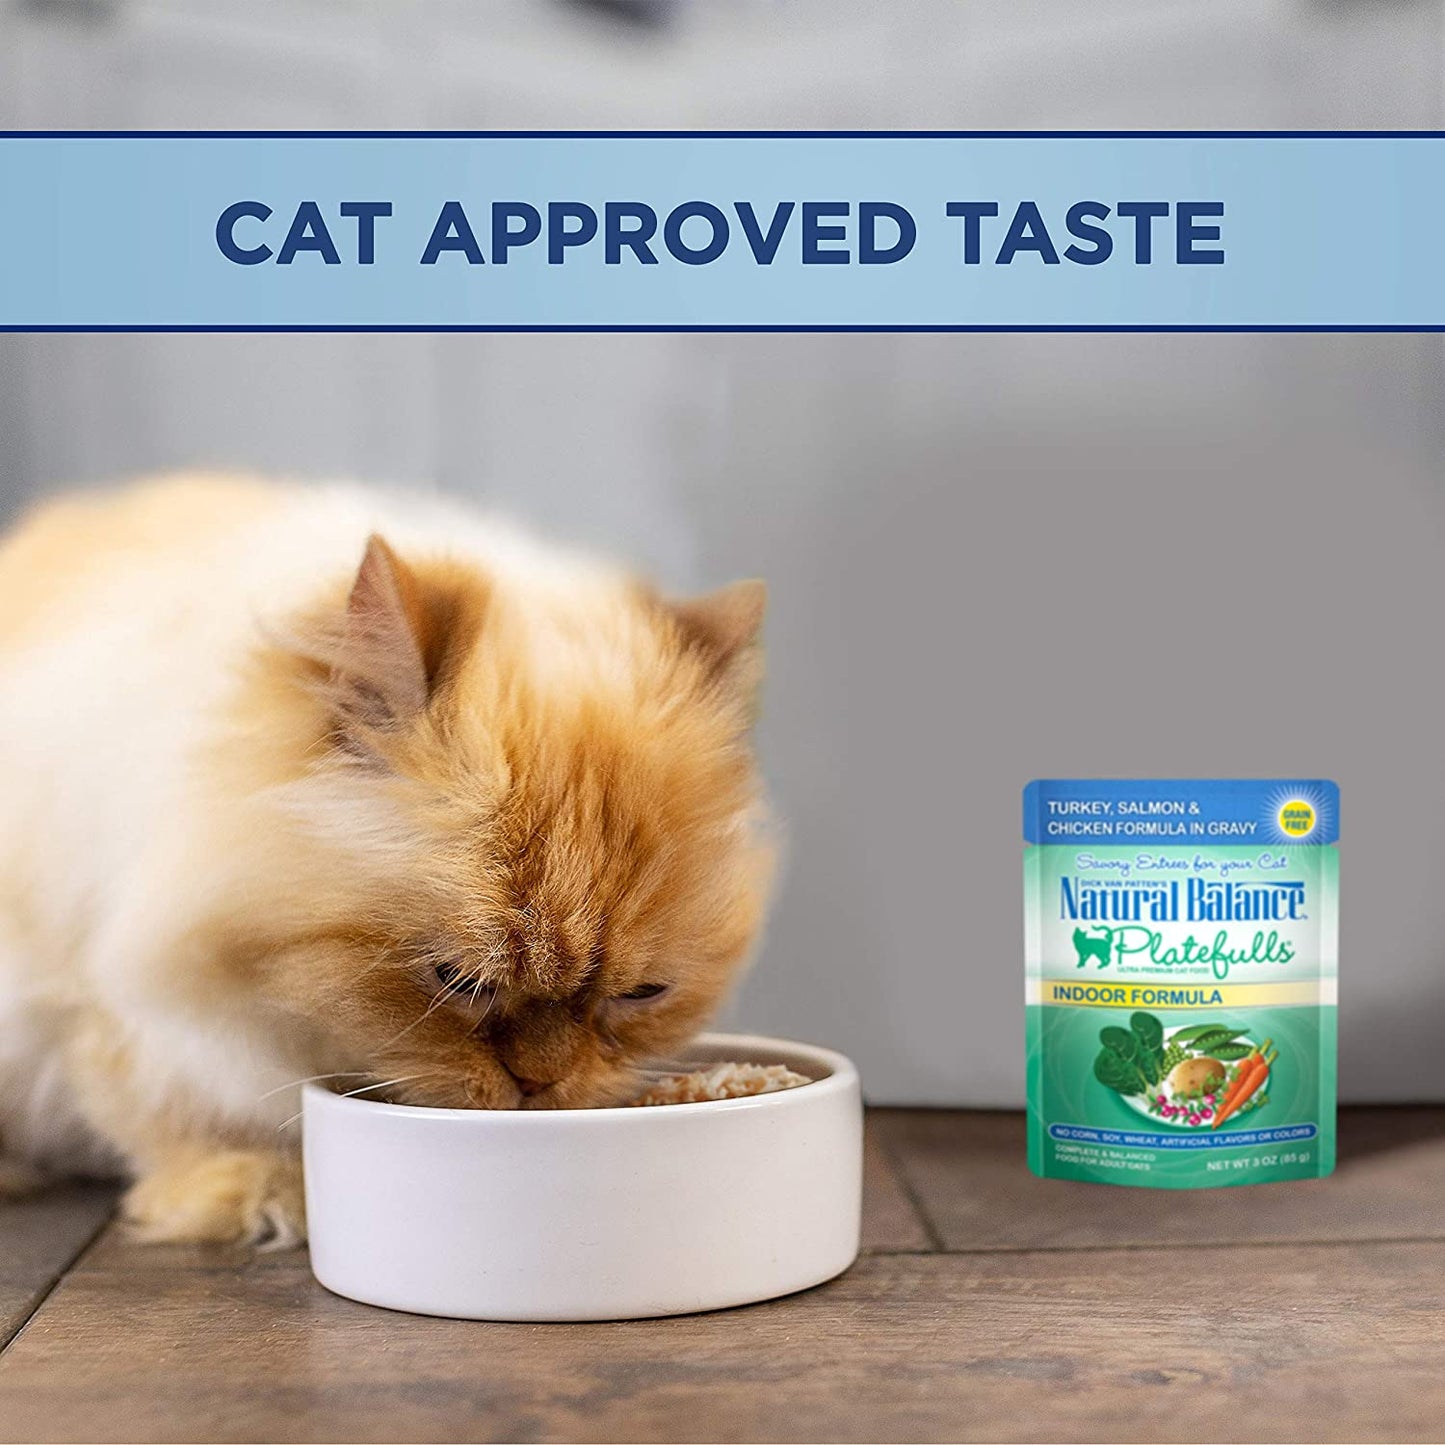 Natural Balance Platefulls Indoor Turkey, Salmon, & Chicken Wet Cat Food  Canned Cat Food  | PetMax Canada